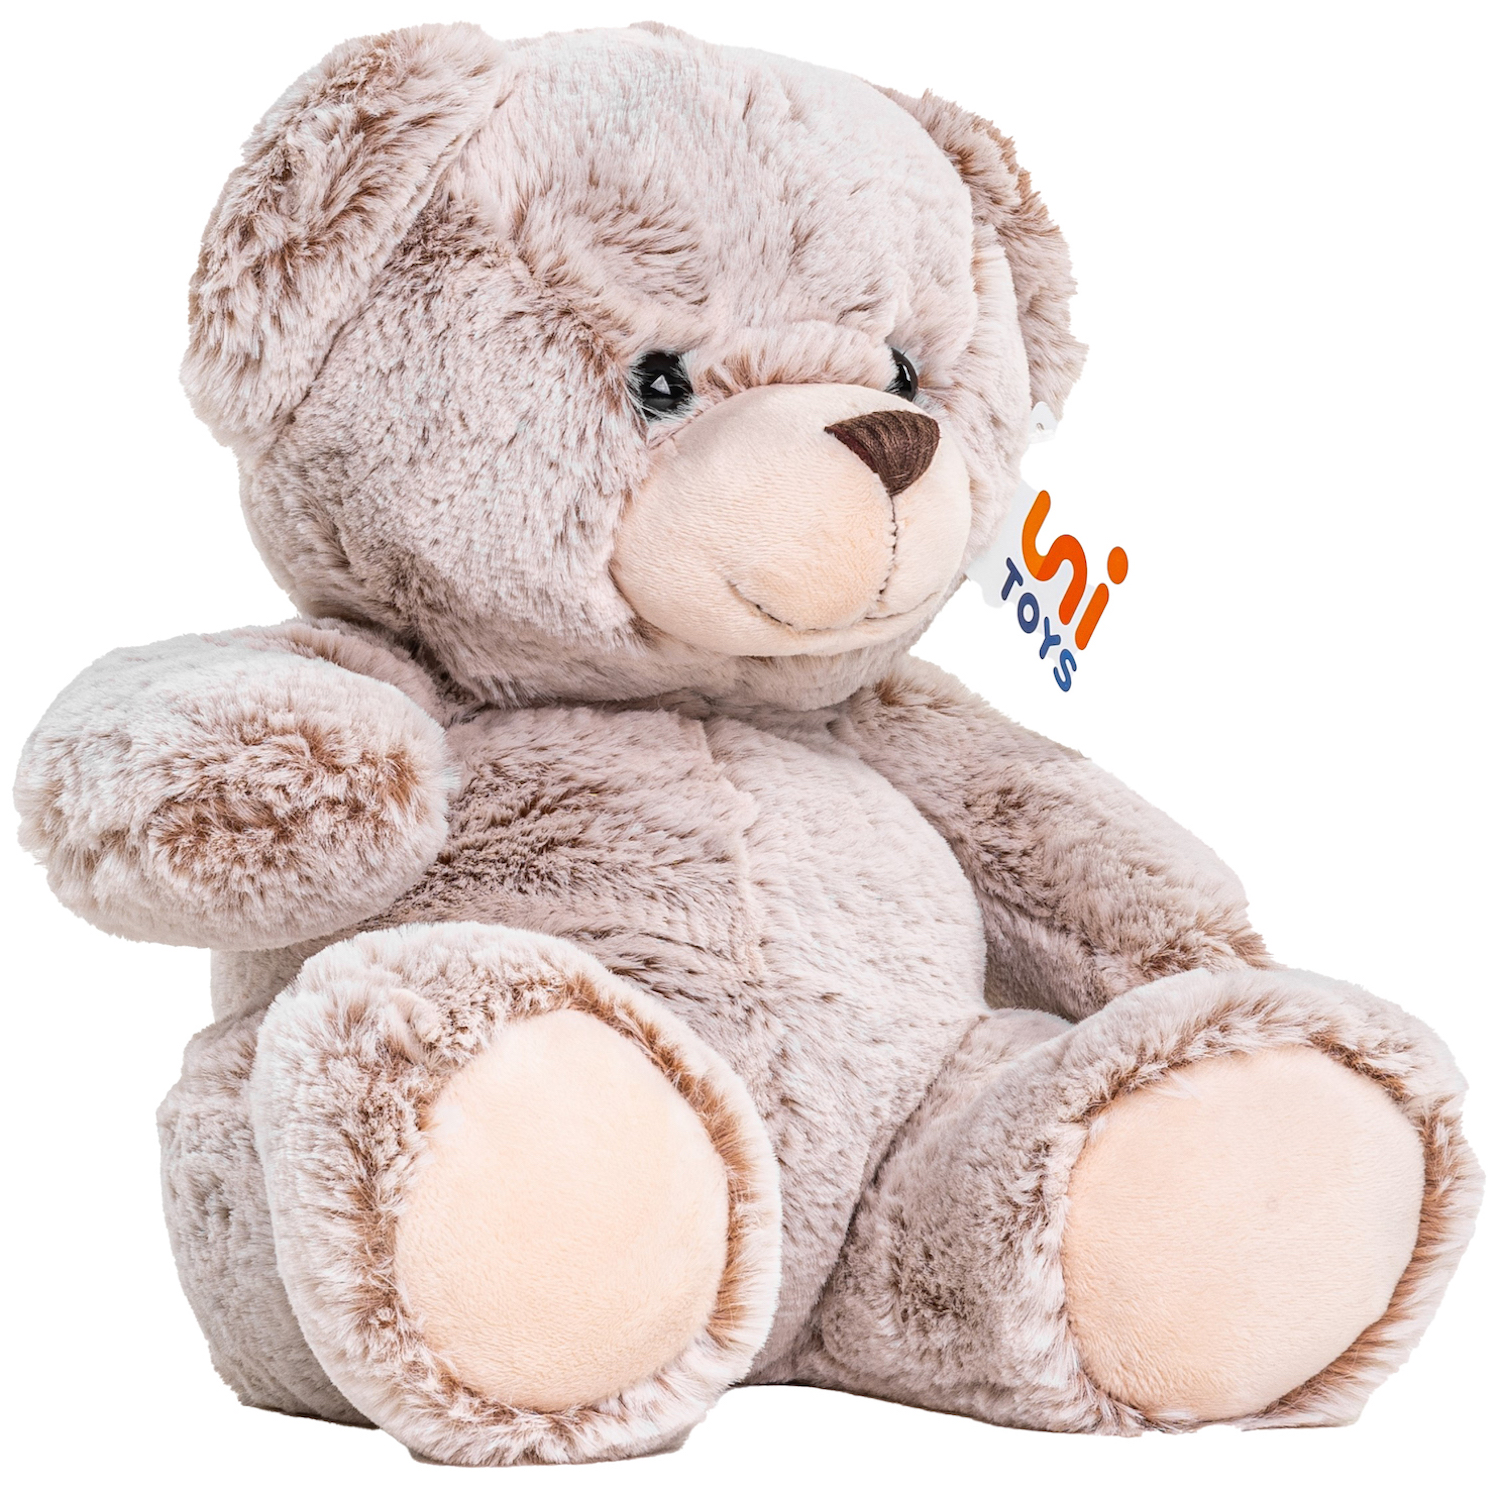 Teddy Super Soft (light brown) - 24 cm (height ) - Teddy Bear  - Stuffed Animal, Plush Toy